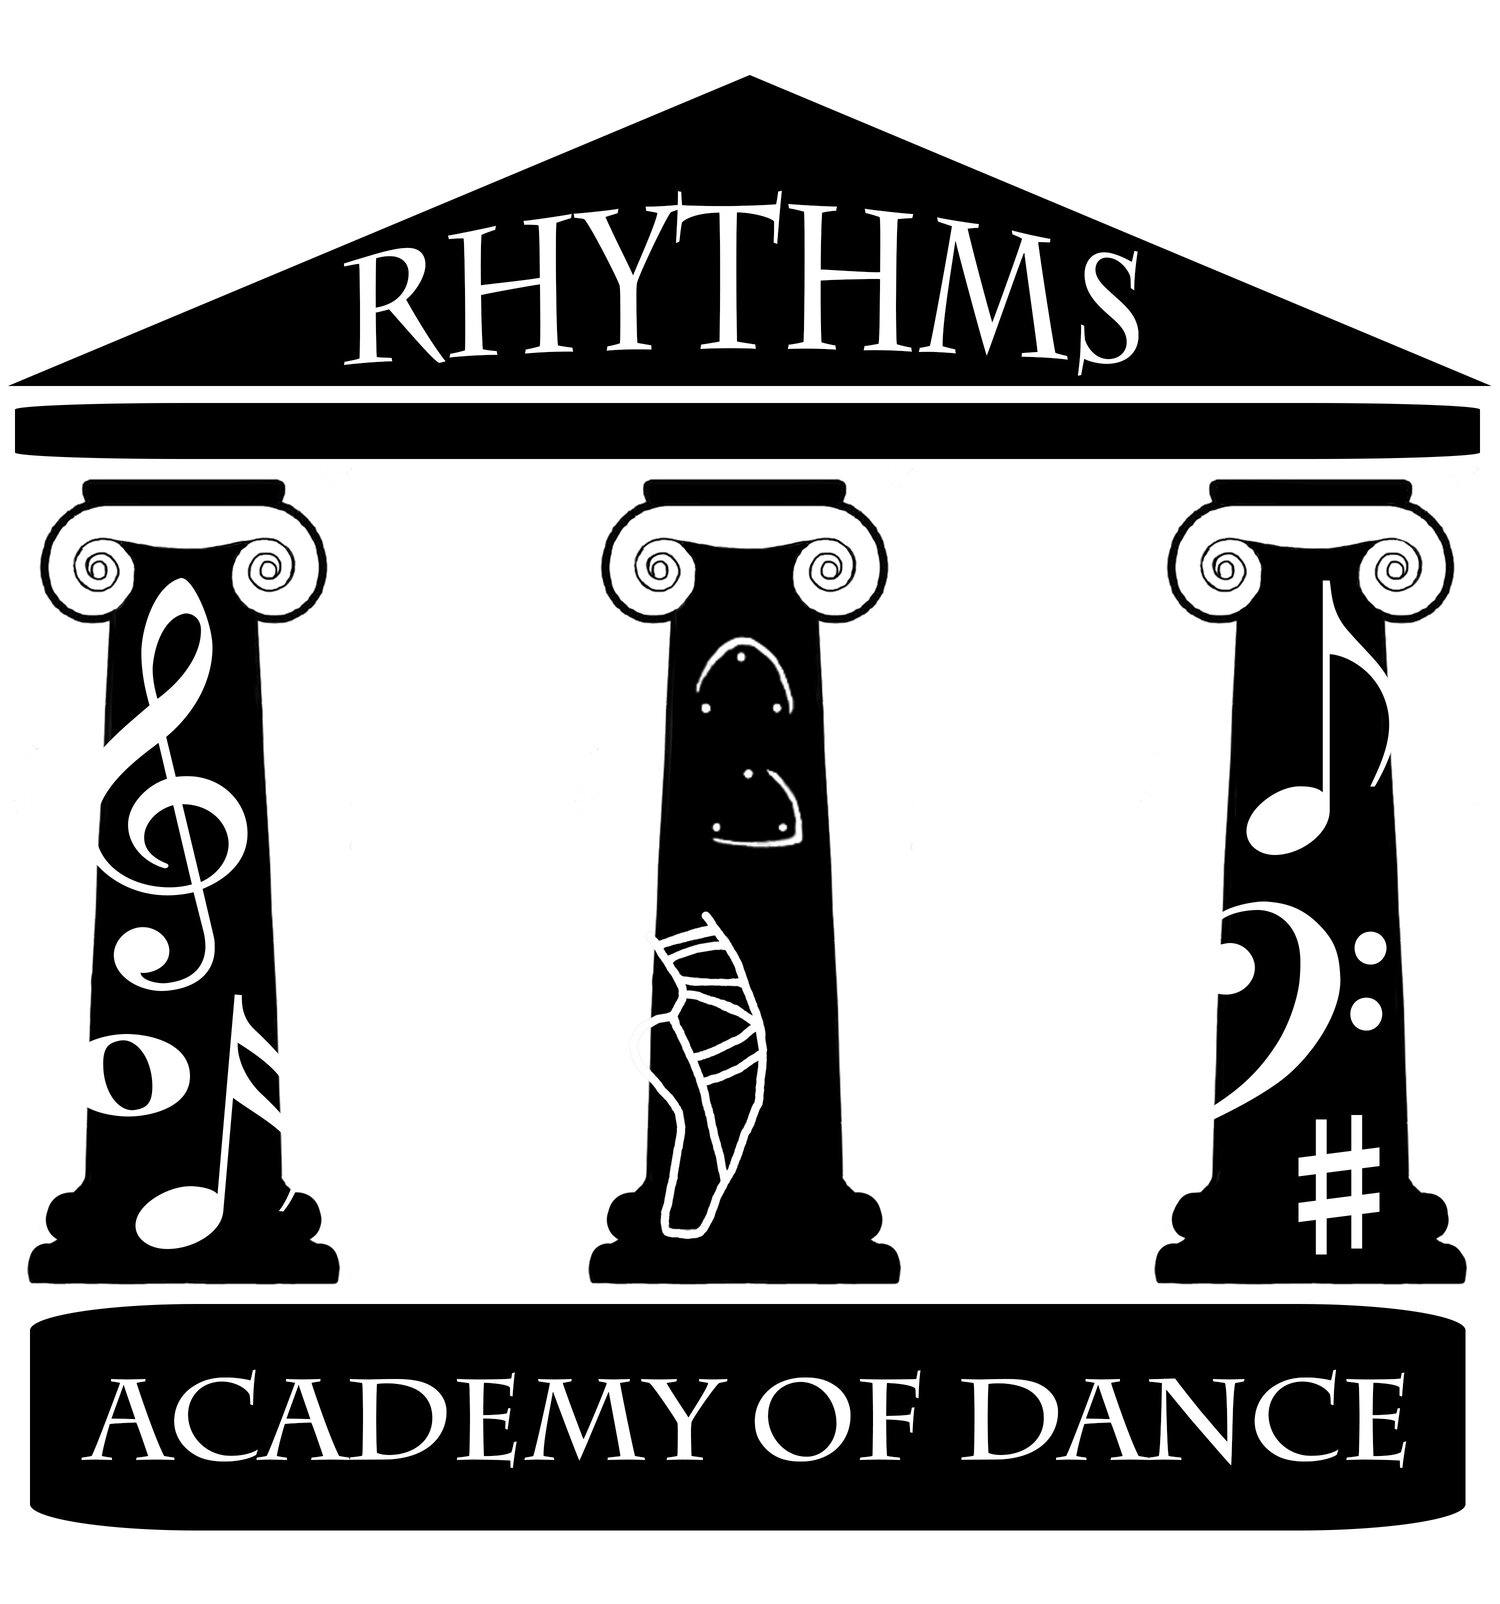 Rhythms Academy of Dance